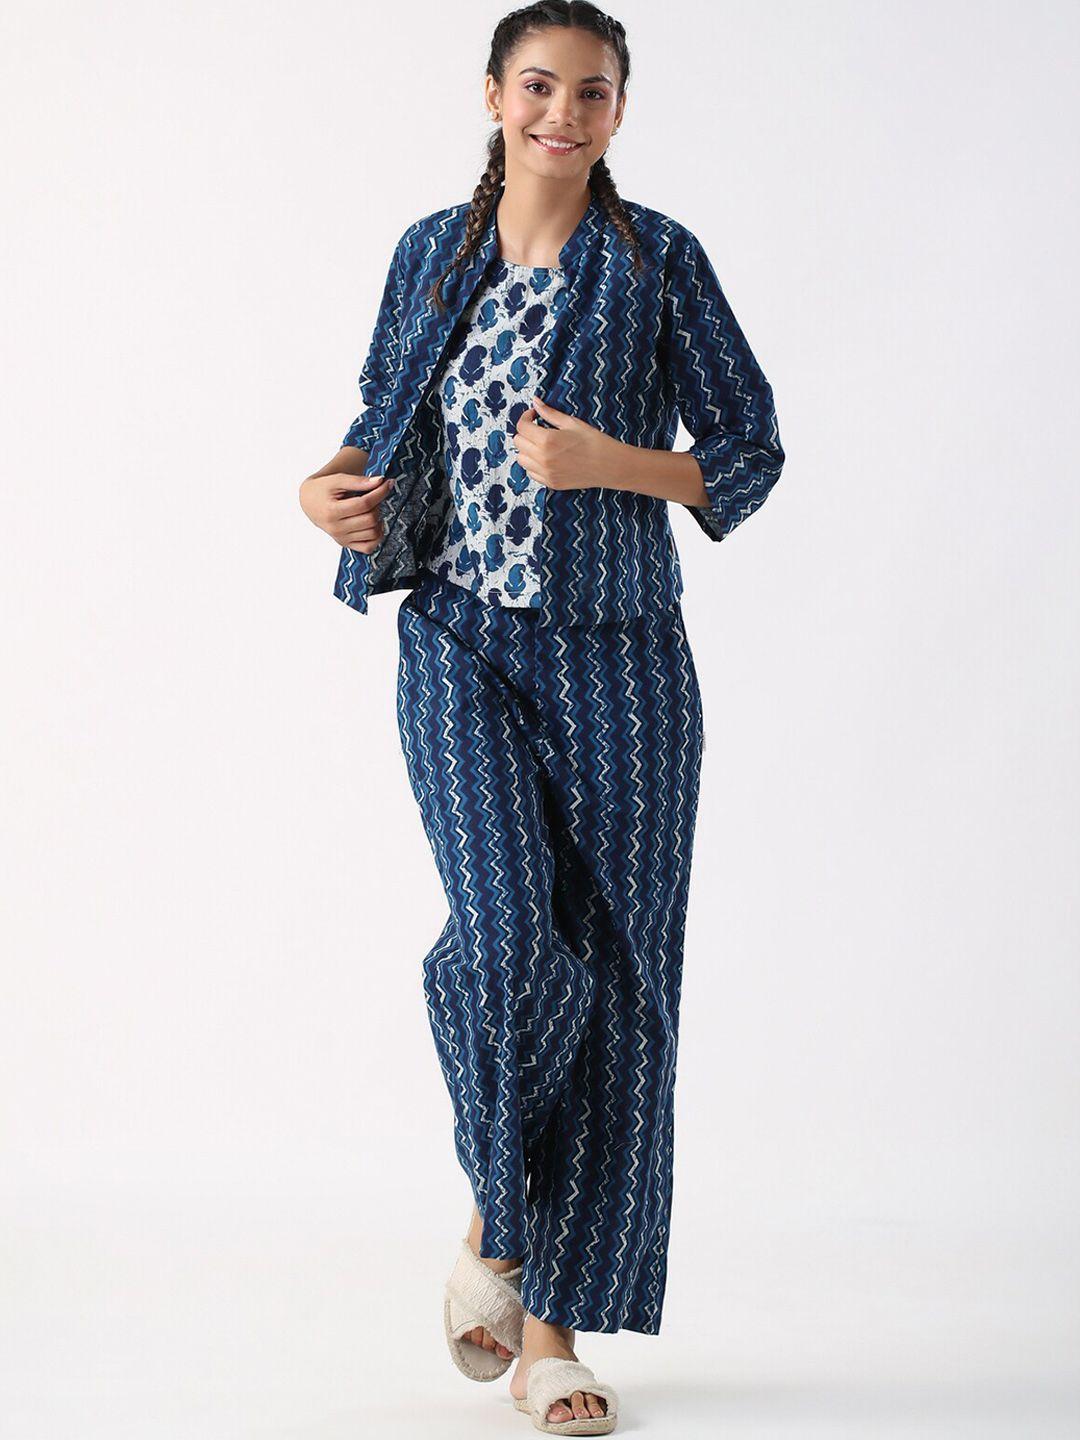 jisora blue & white printed ethnic motifs pure cotton night suit with shrug